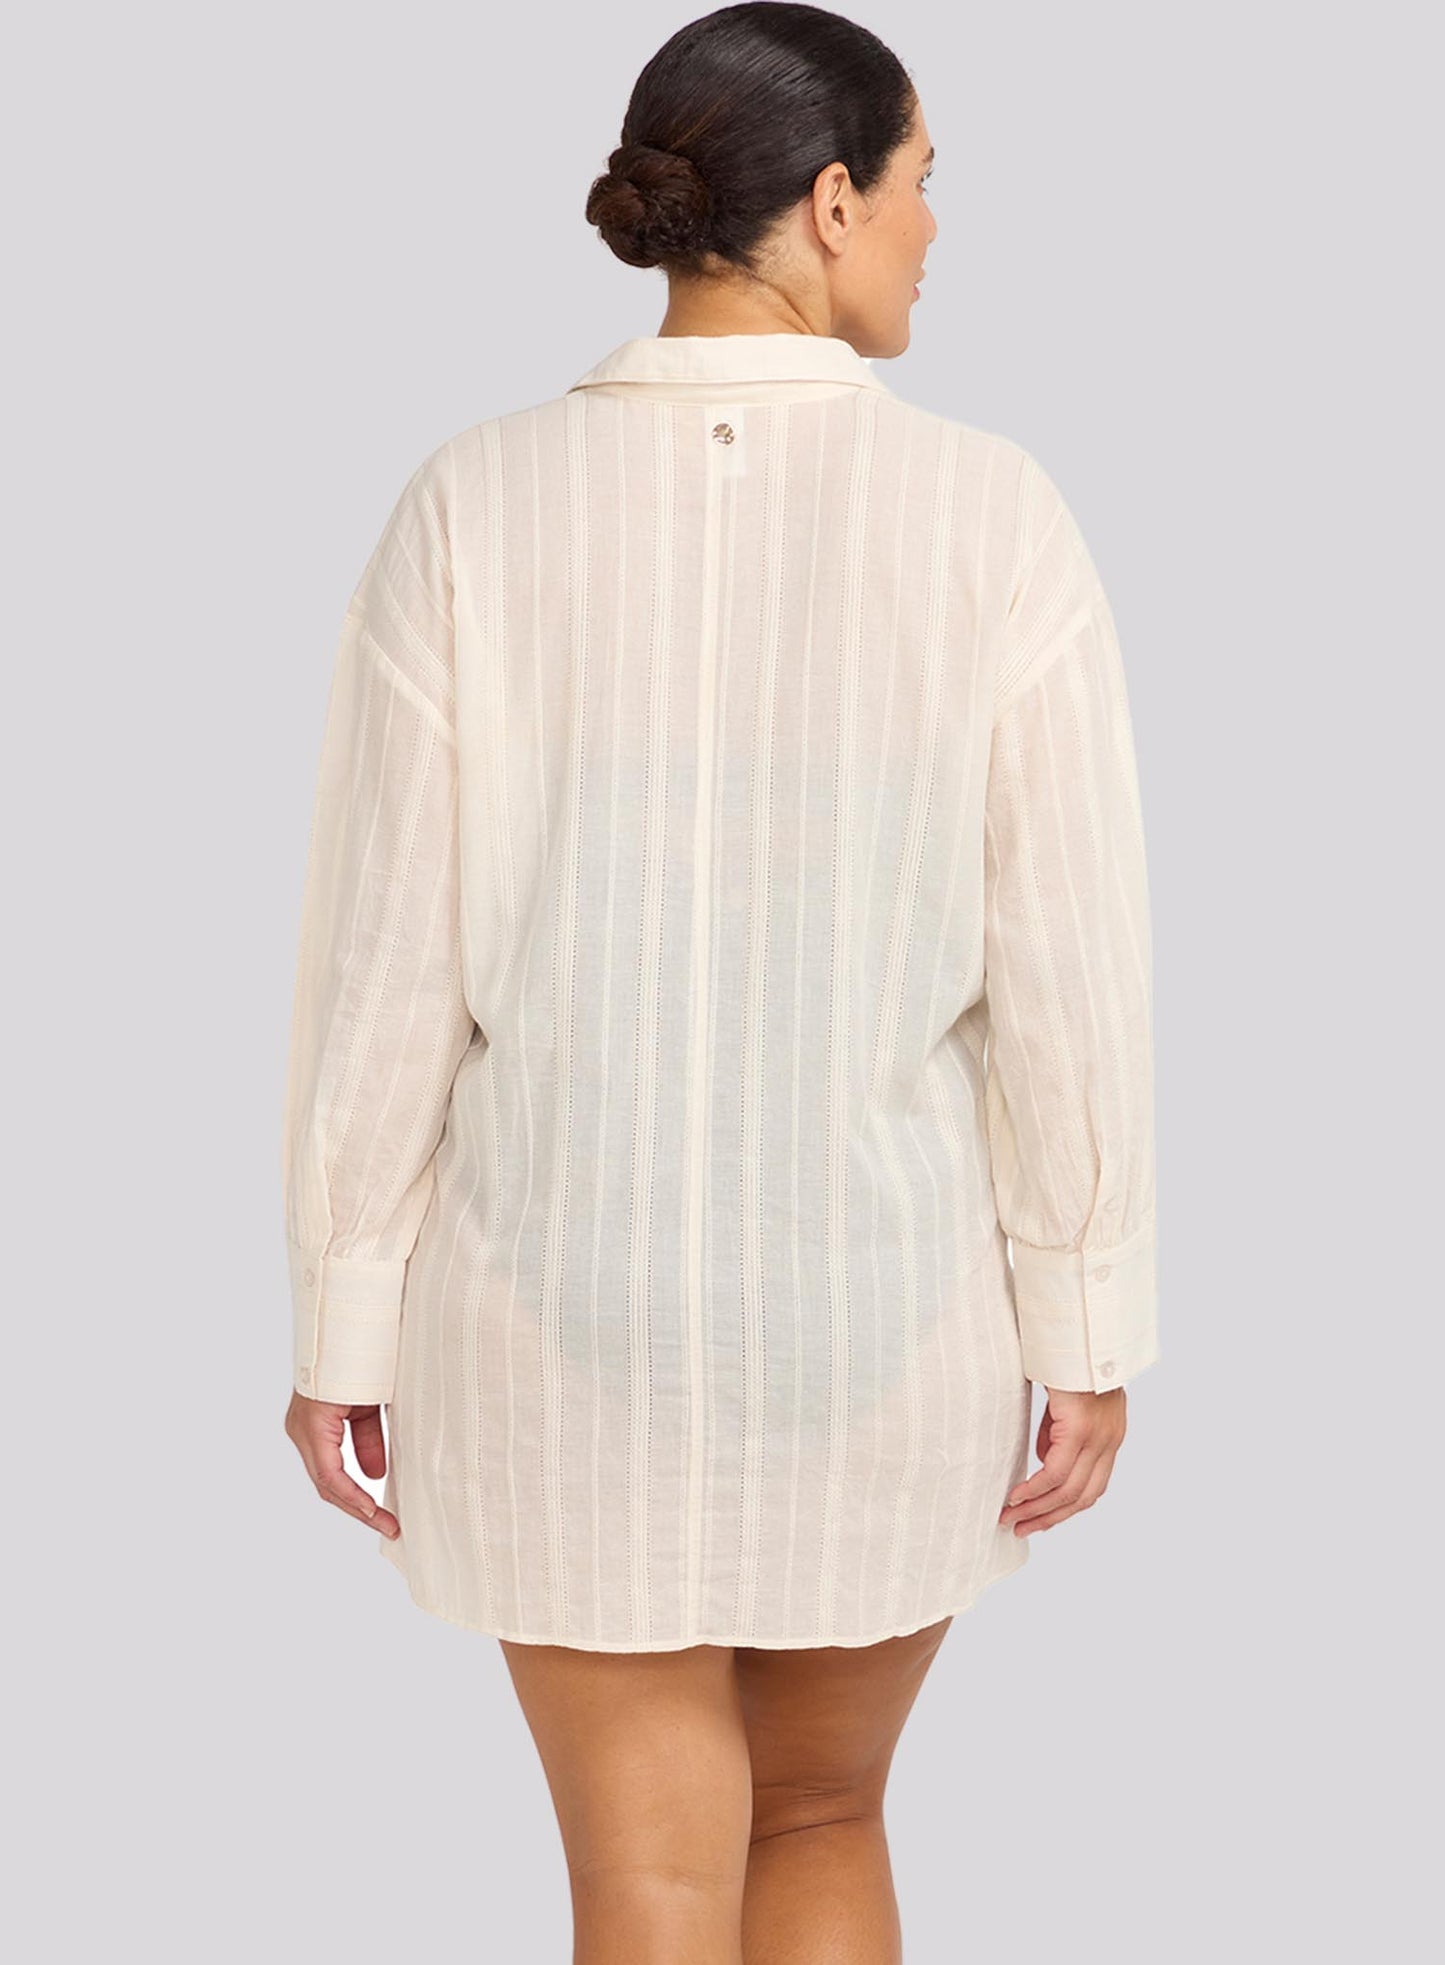 Artesands: Resort Wear Mahler Over Shirt Cover Up Cream